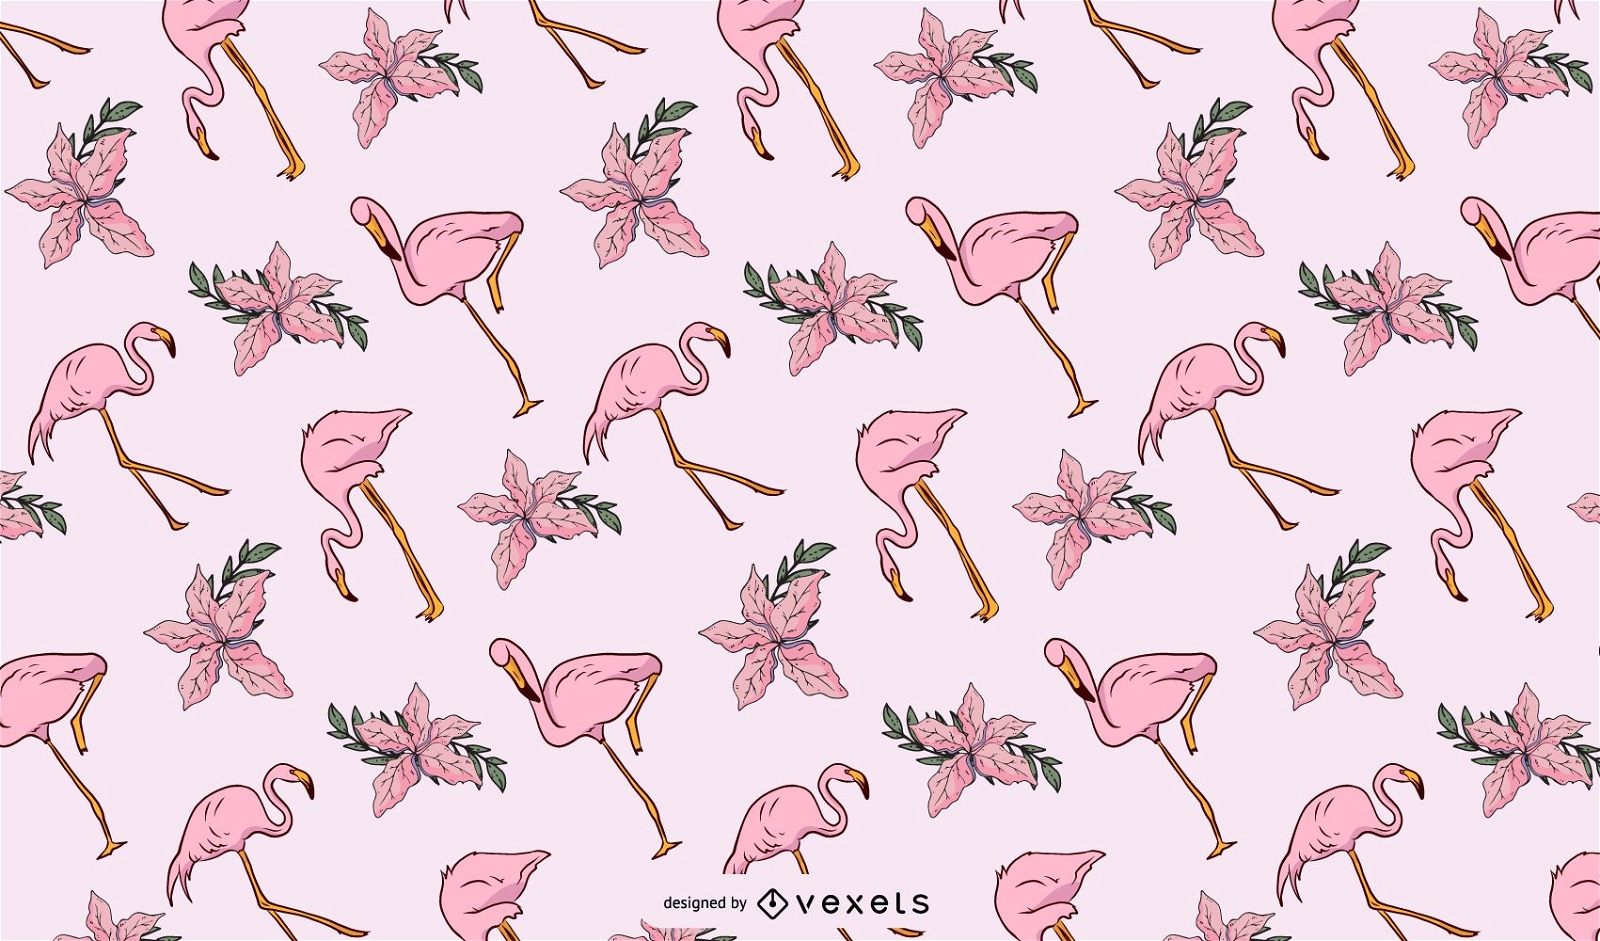 Flamingo flowers pattern design